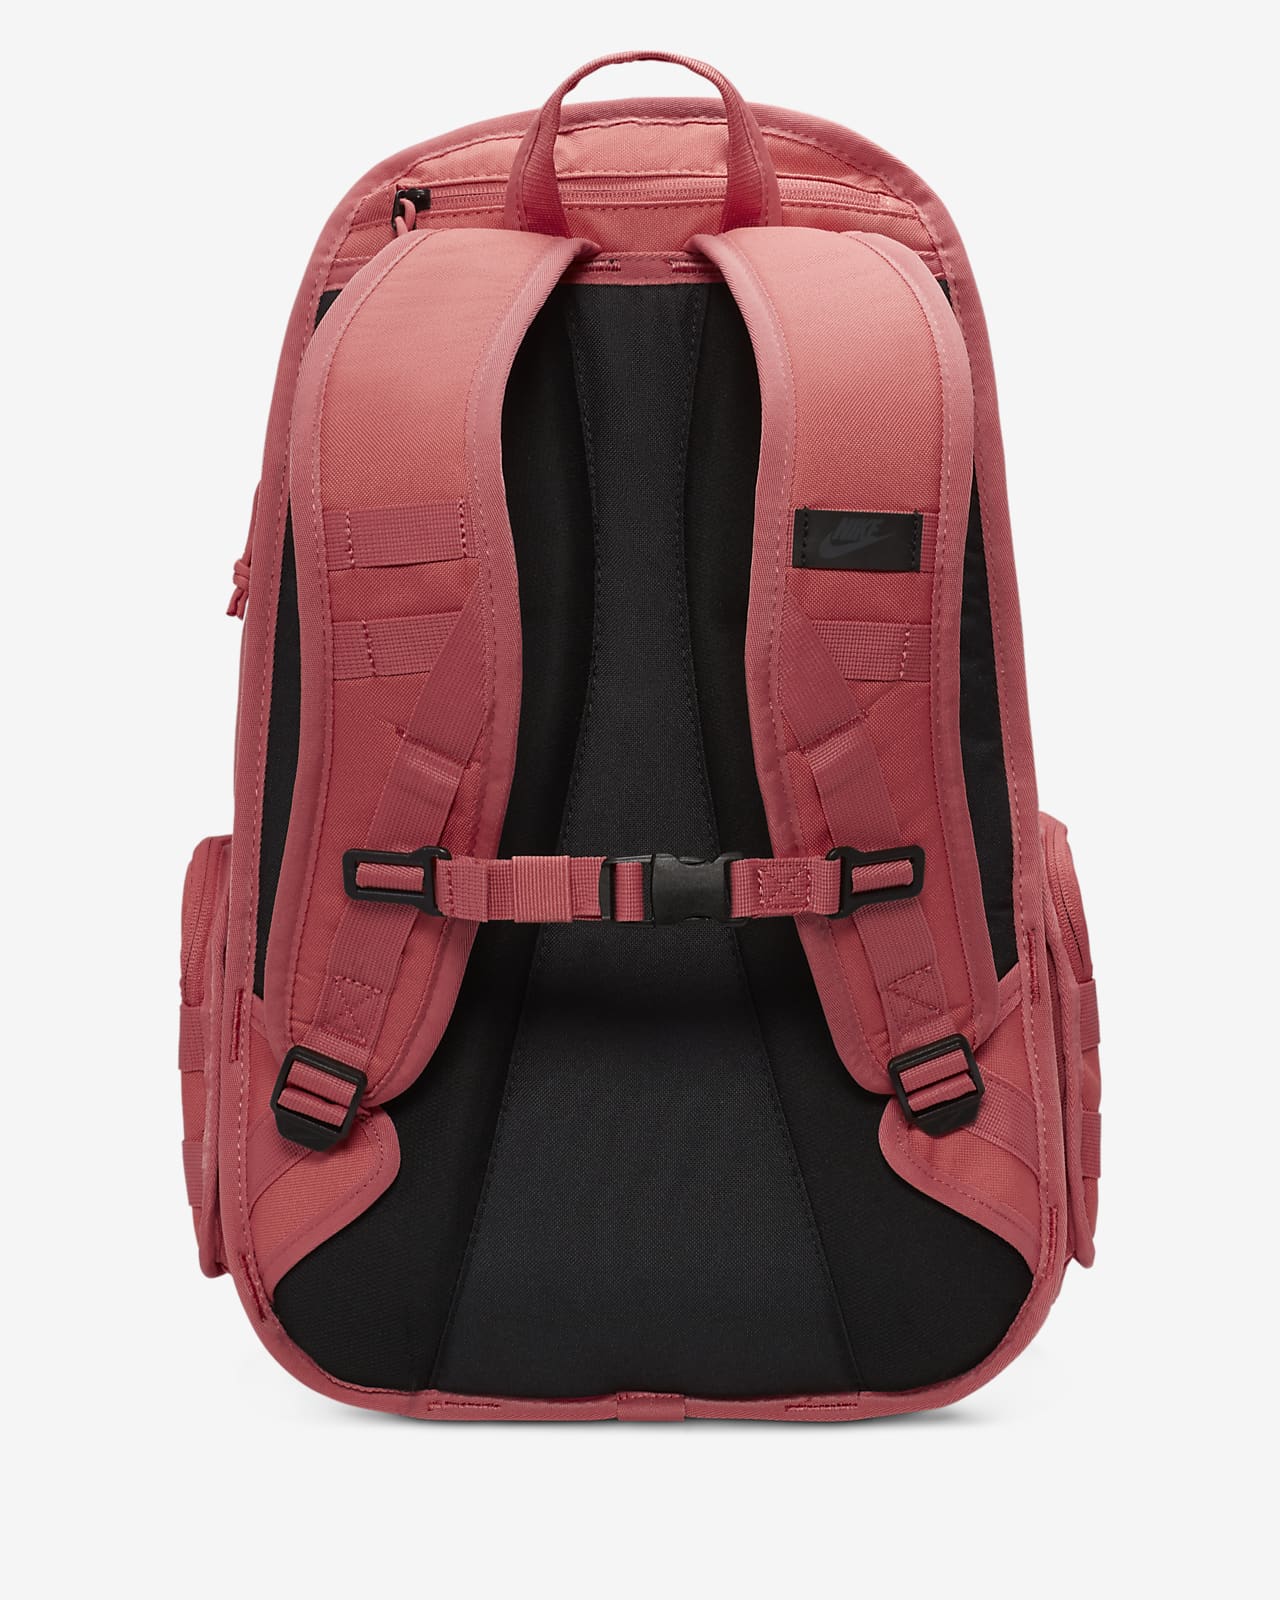 sac a dos Nike Rpm backpack - Prune / Anthracite - Vegaskateshop